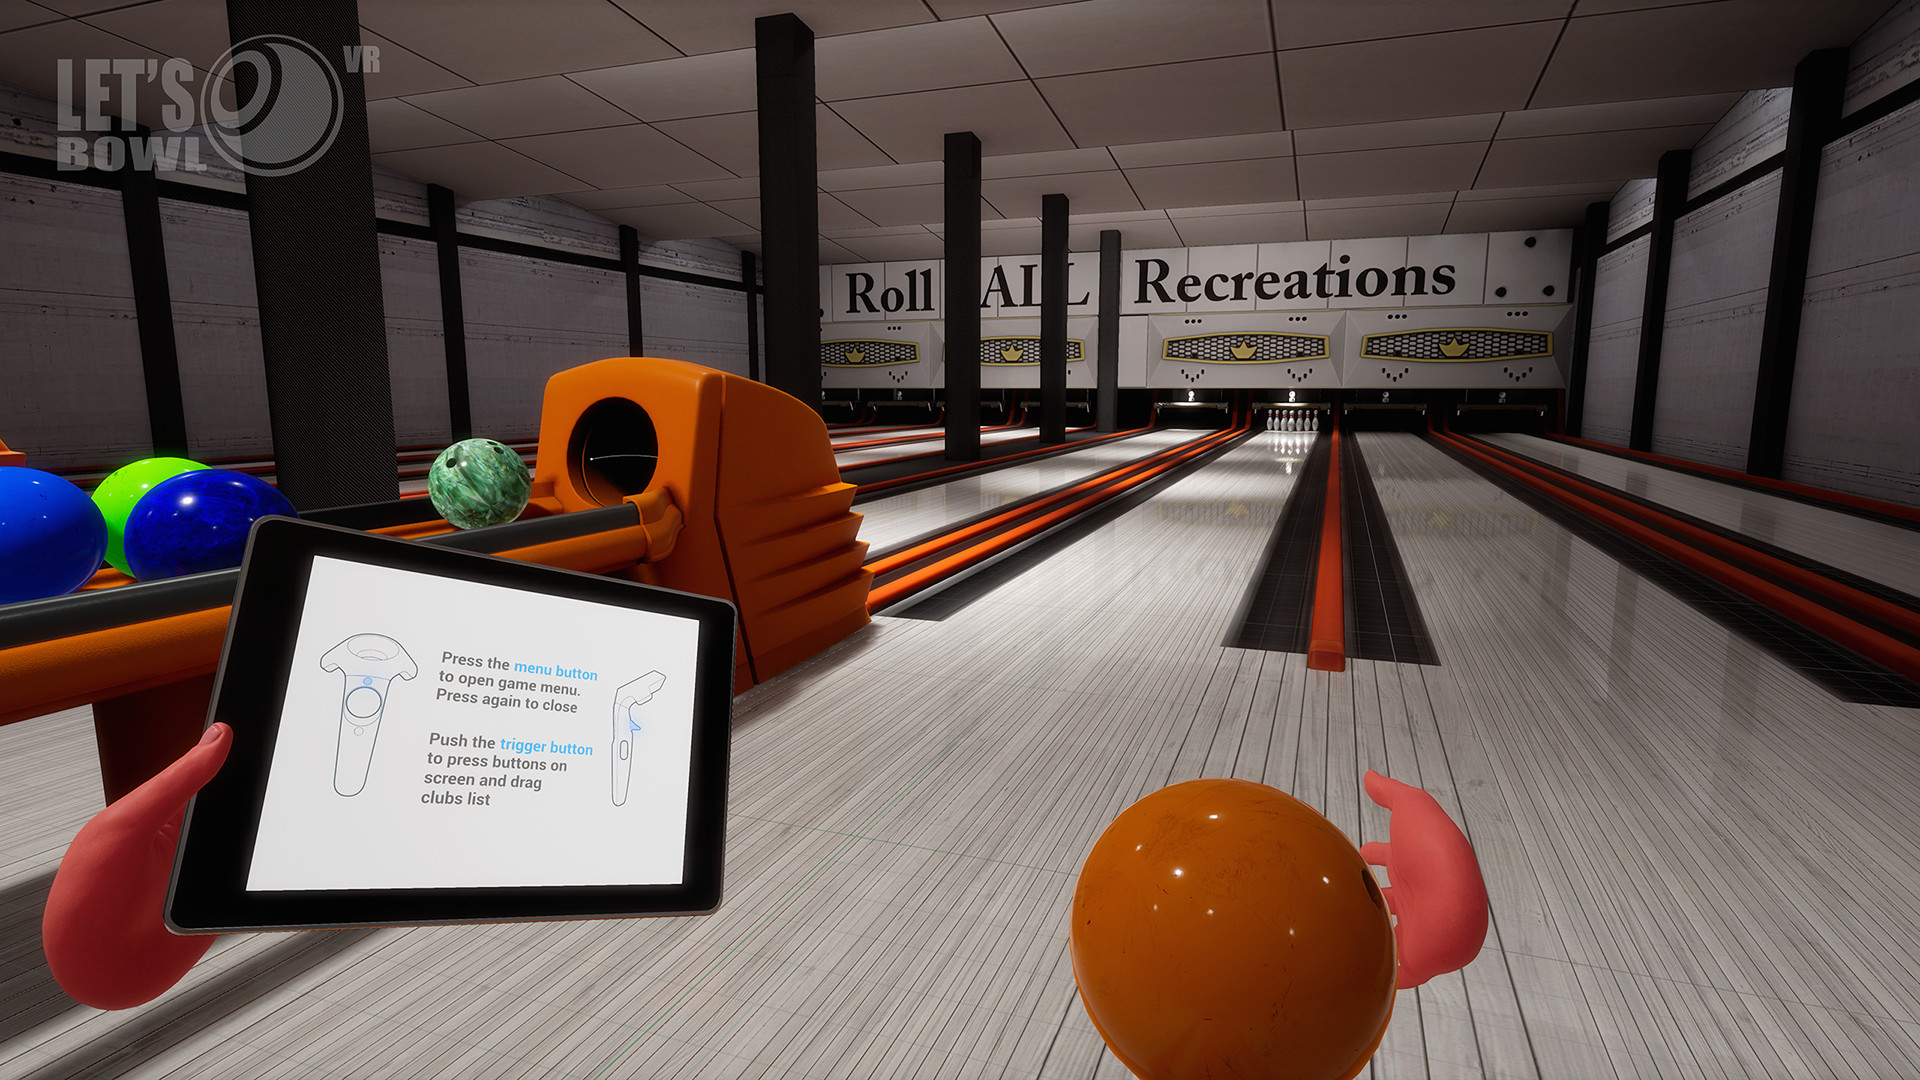 Let's Bowl VR - Bowling Game screenshot